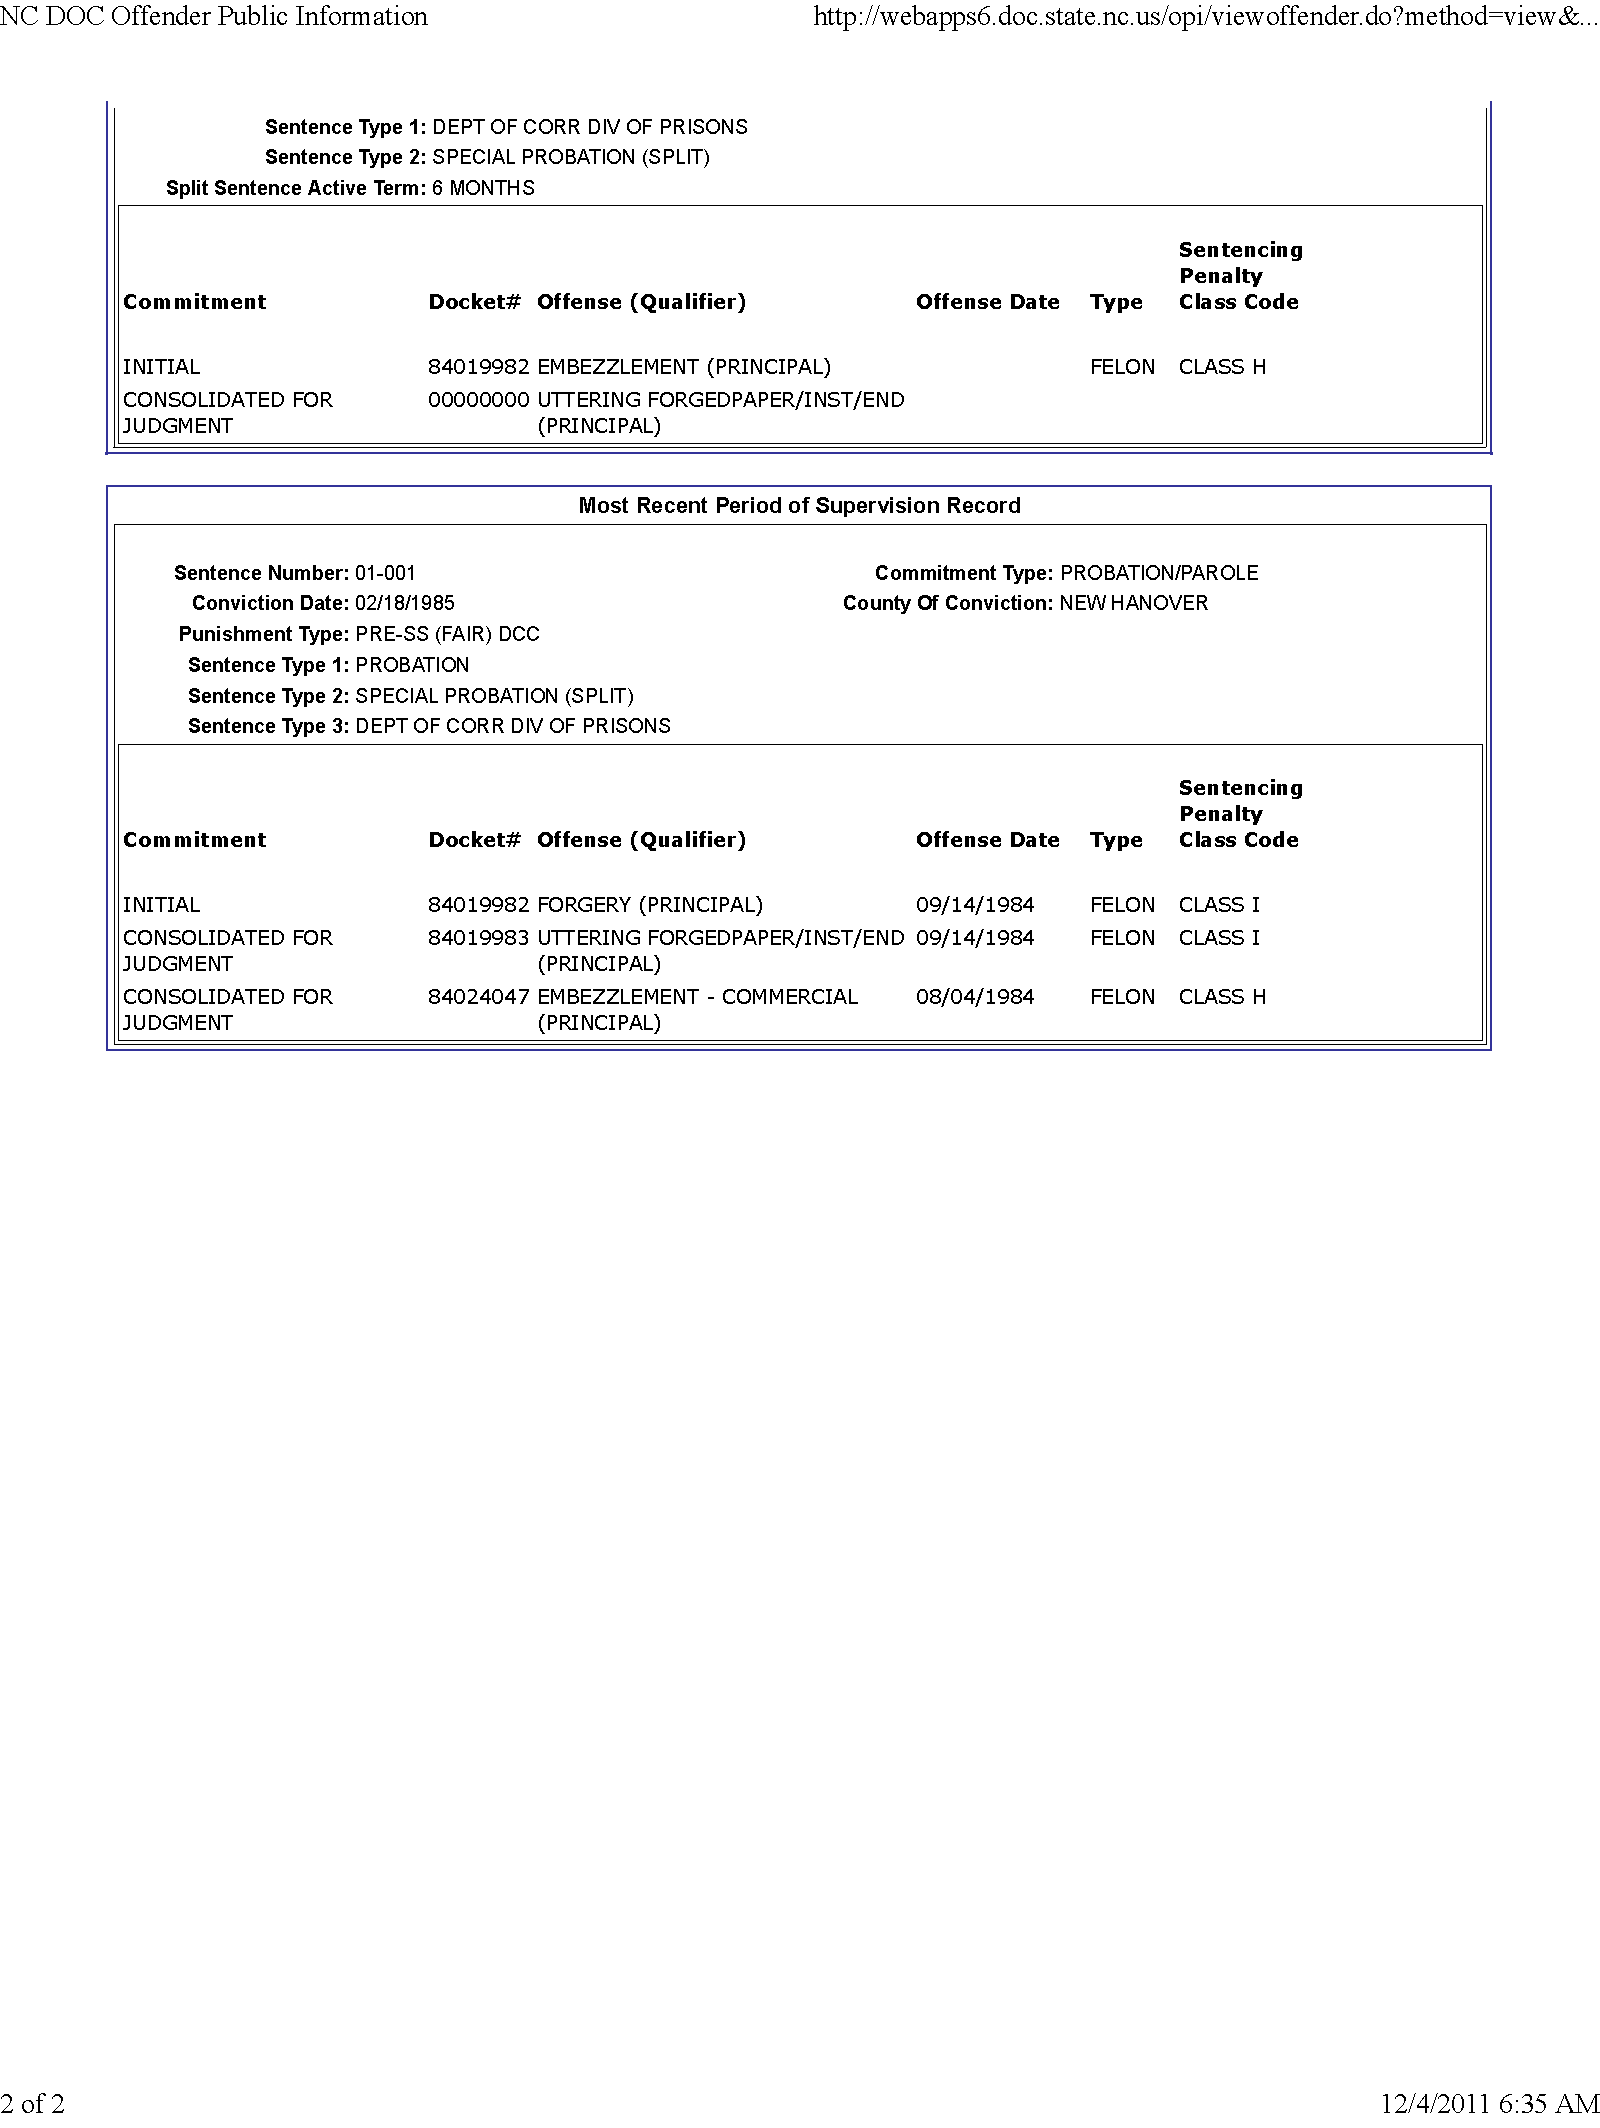 Copy of surridge ralph david nc doc offender public info2.png